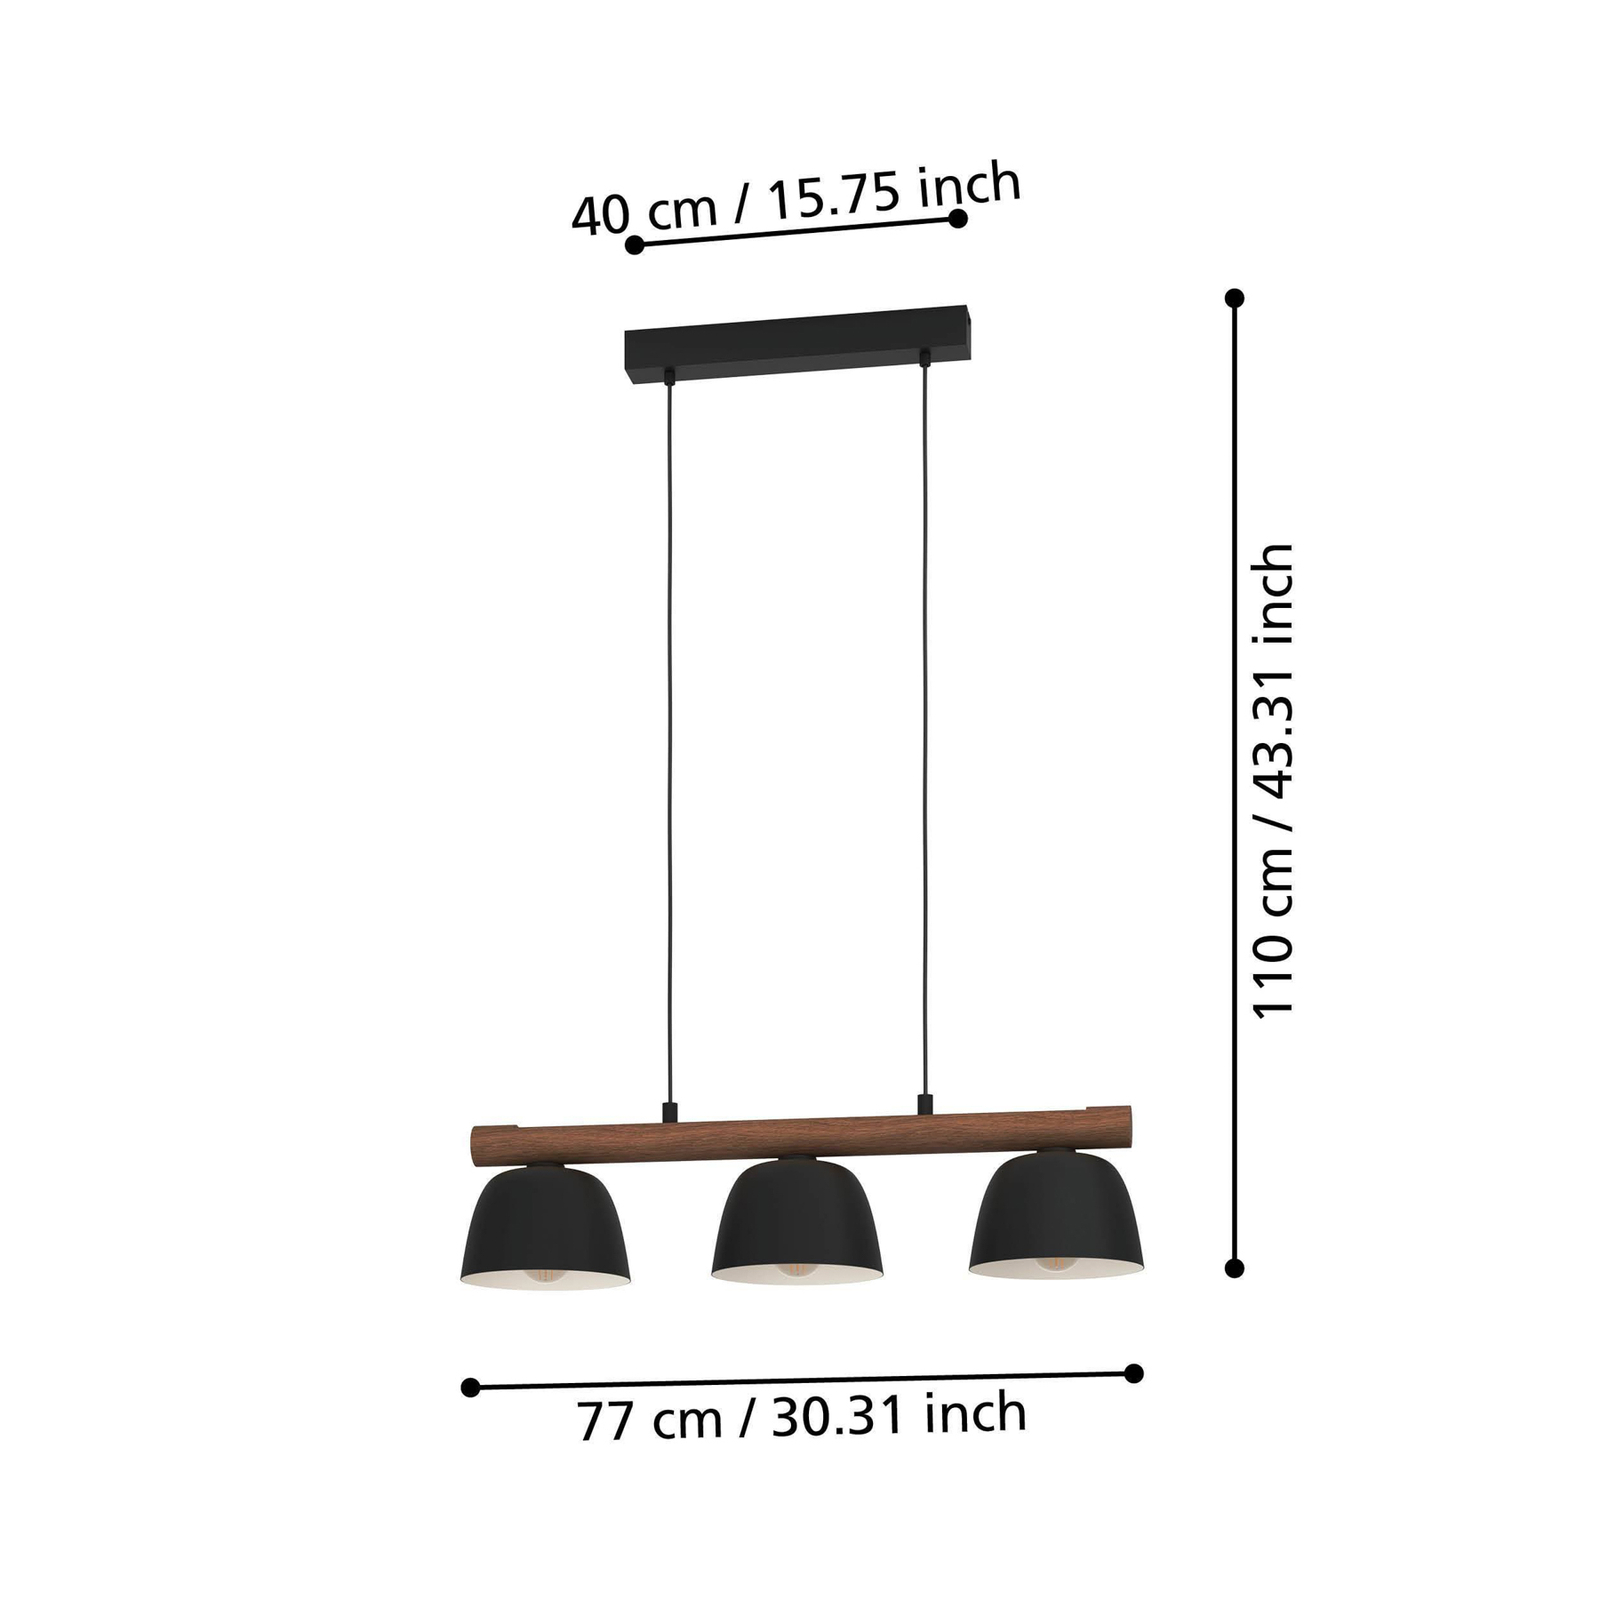 Lampada a sospensione Sherburn, lunghezza 77 cm, nero/marrone, a 3 luci.